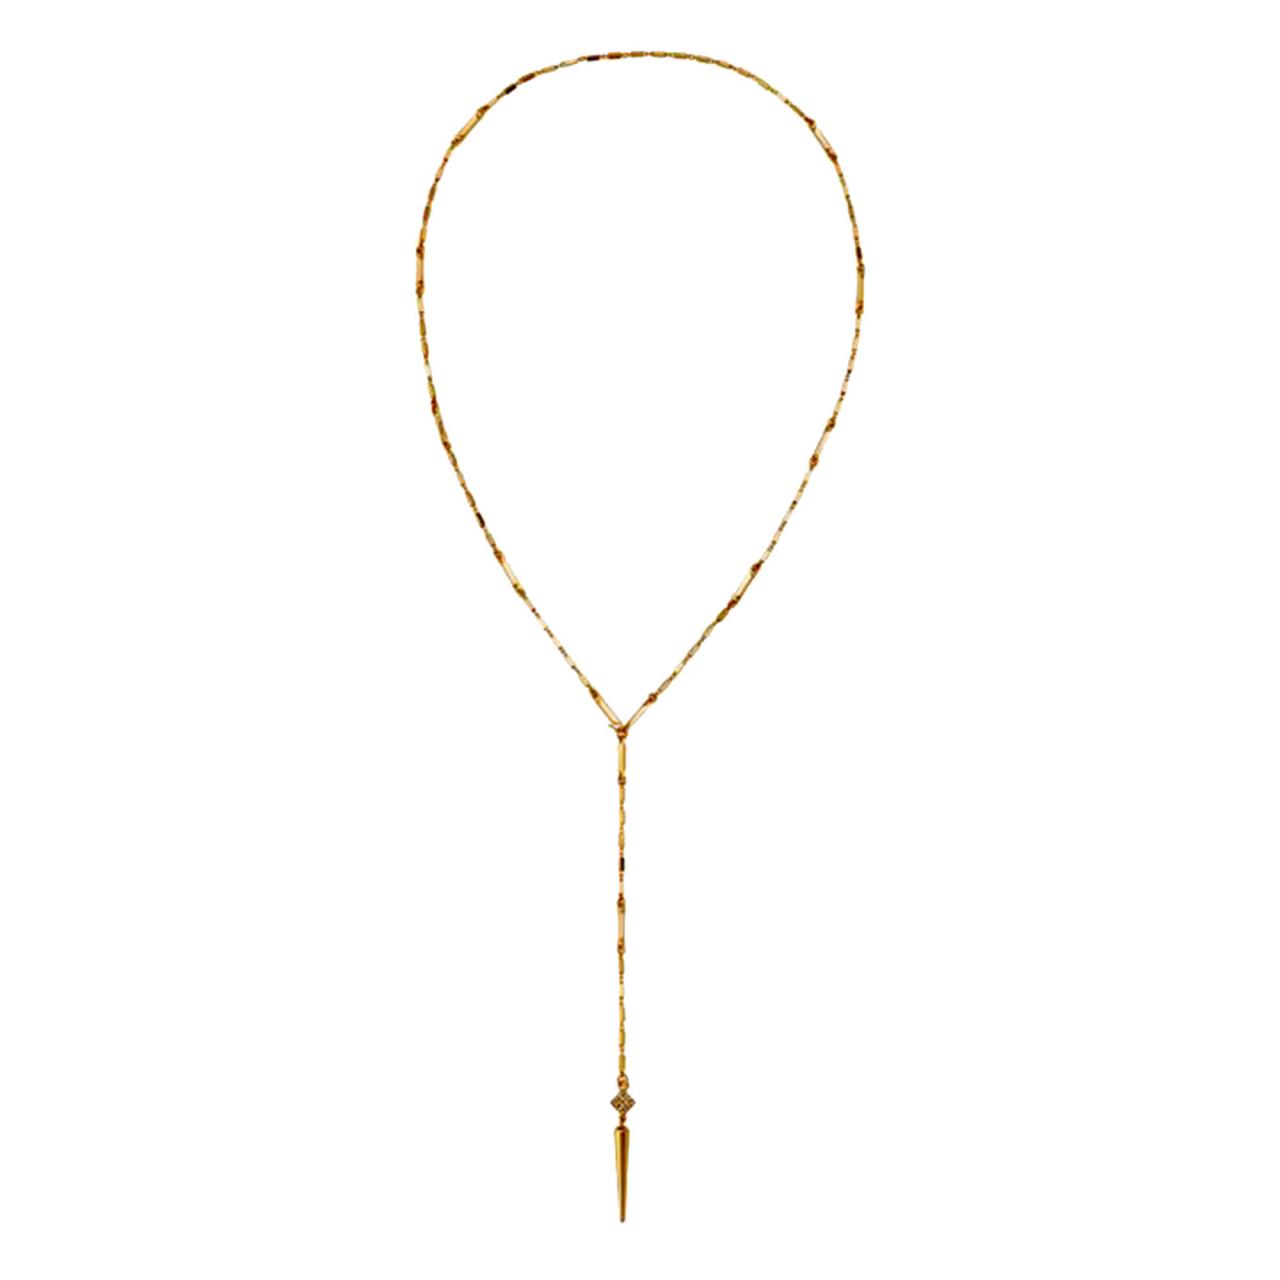 Gold Lariat Necklace / Y Necklace / Gold Necklace / Delicate Necklace / Chain Necklace / Everyday Necklace / Zircon Necklace / Long Necklace